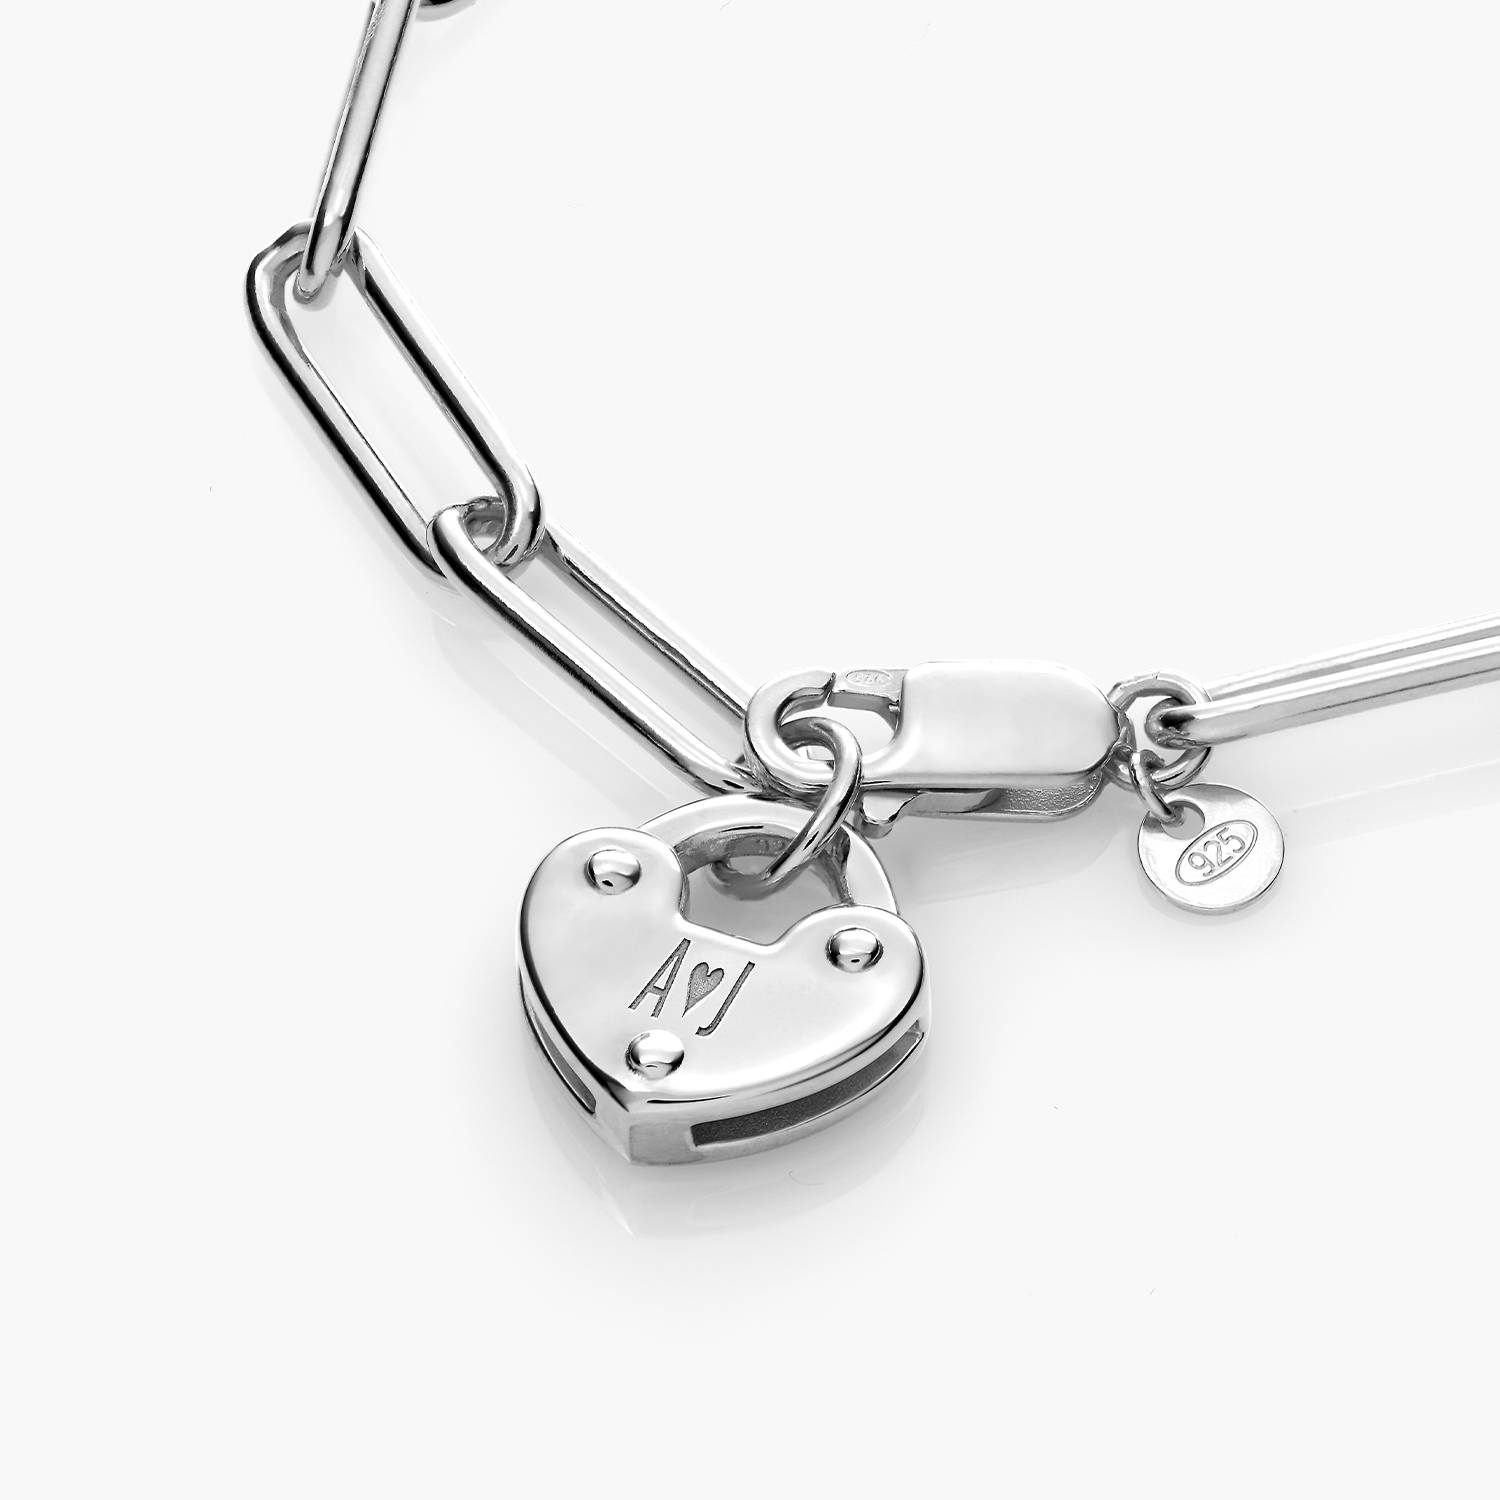 Heart Charm Lock Bracelet - Silver product photo